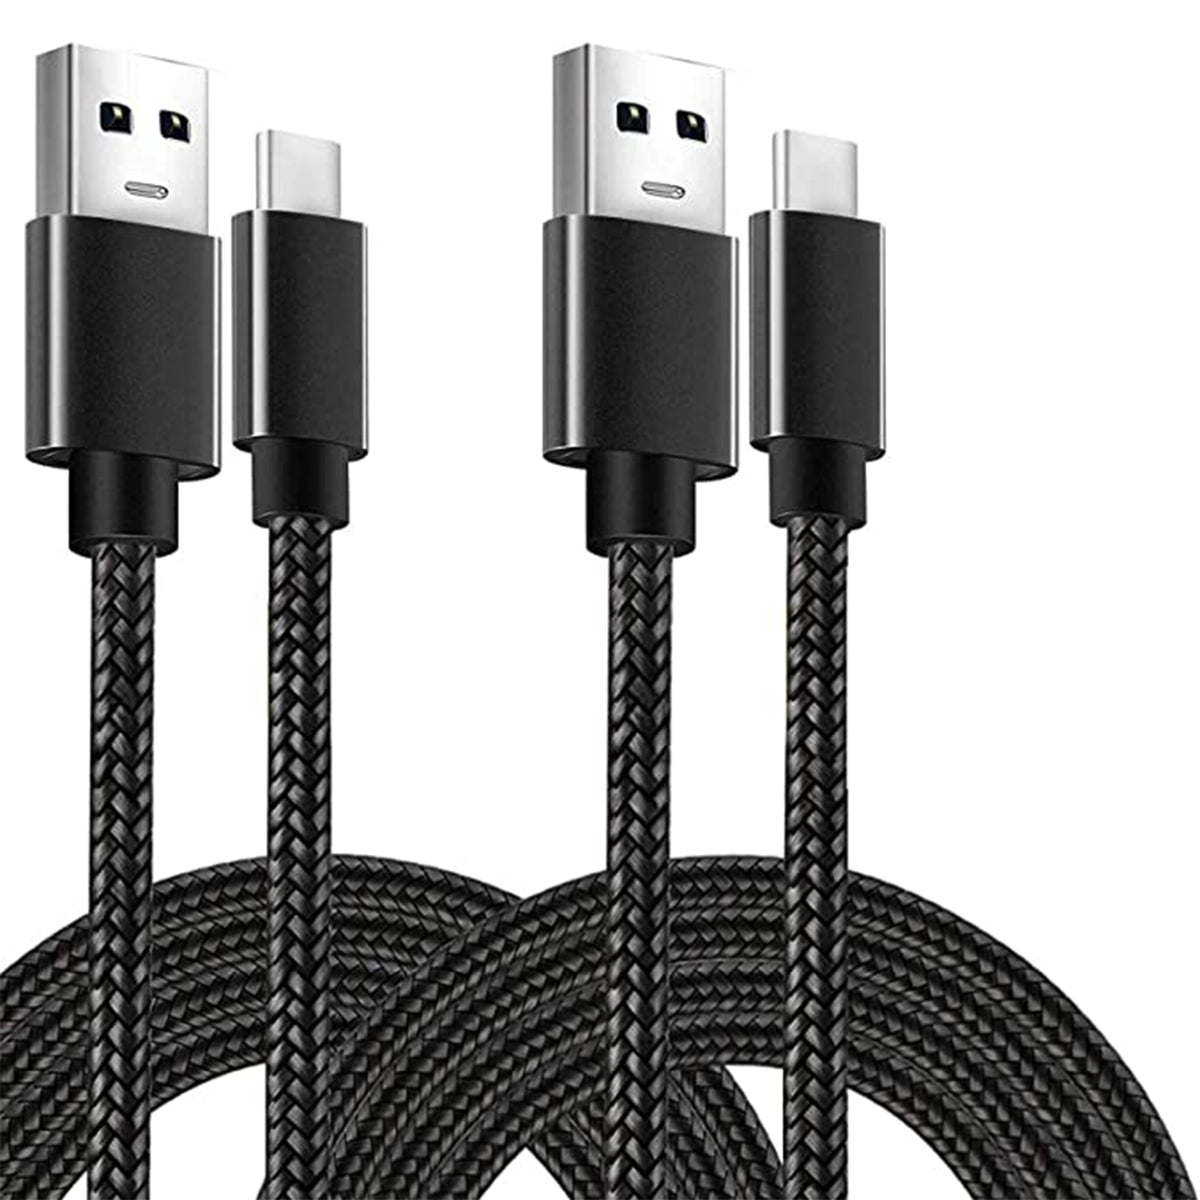 Rainbow USB-C to USB-C Cable [10 ft / 3m length]